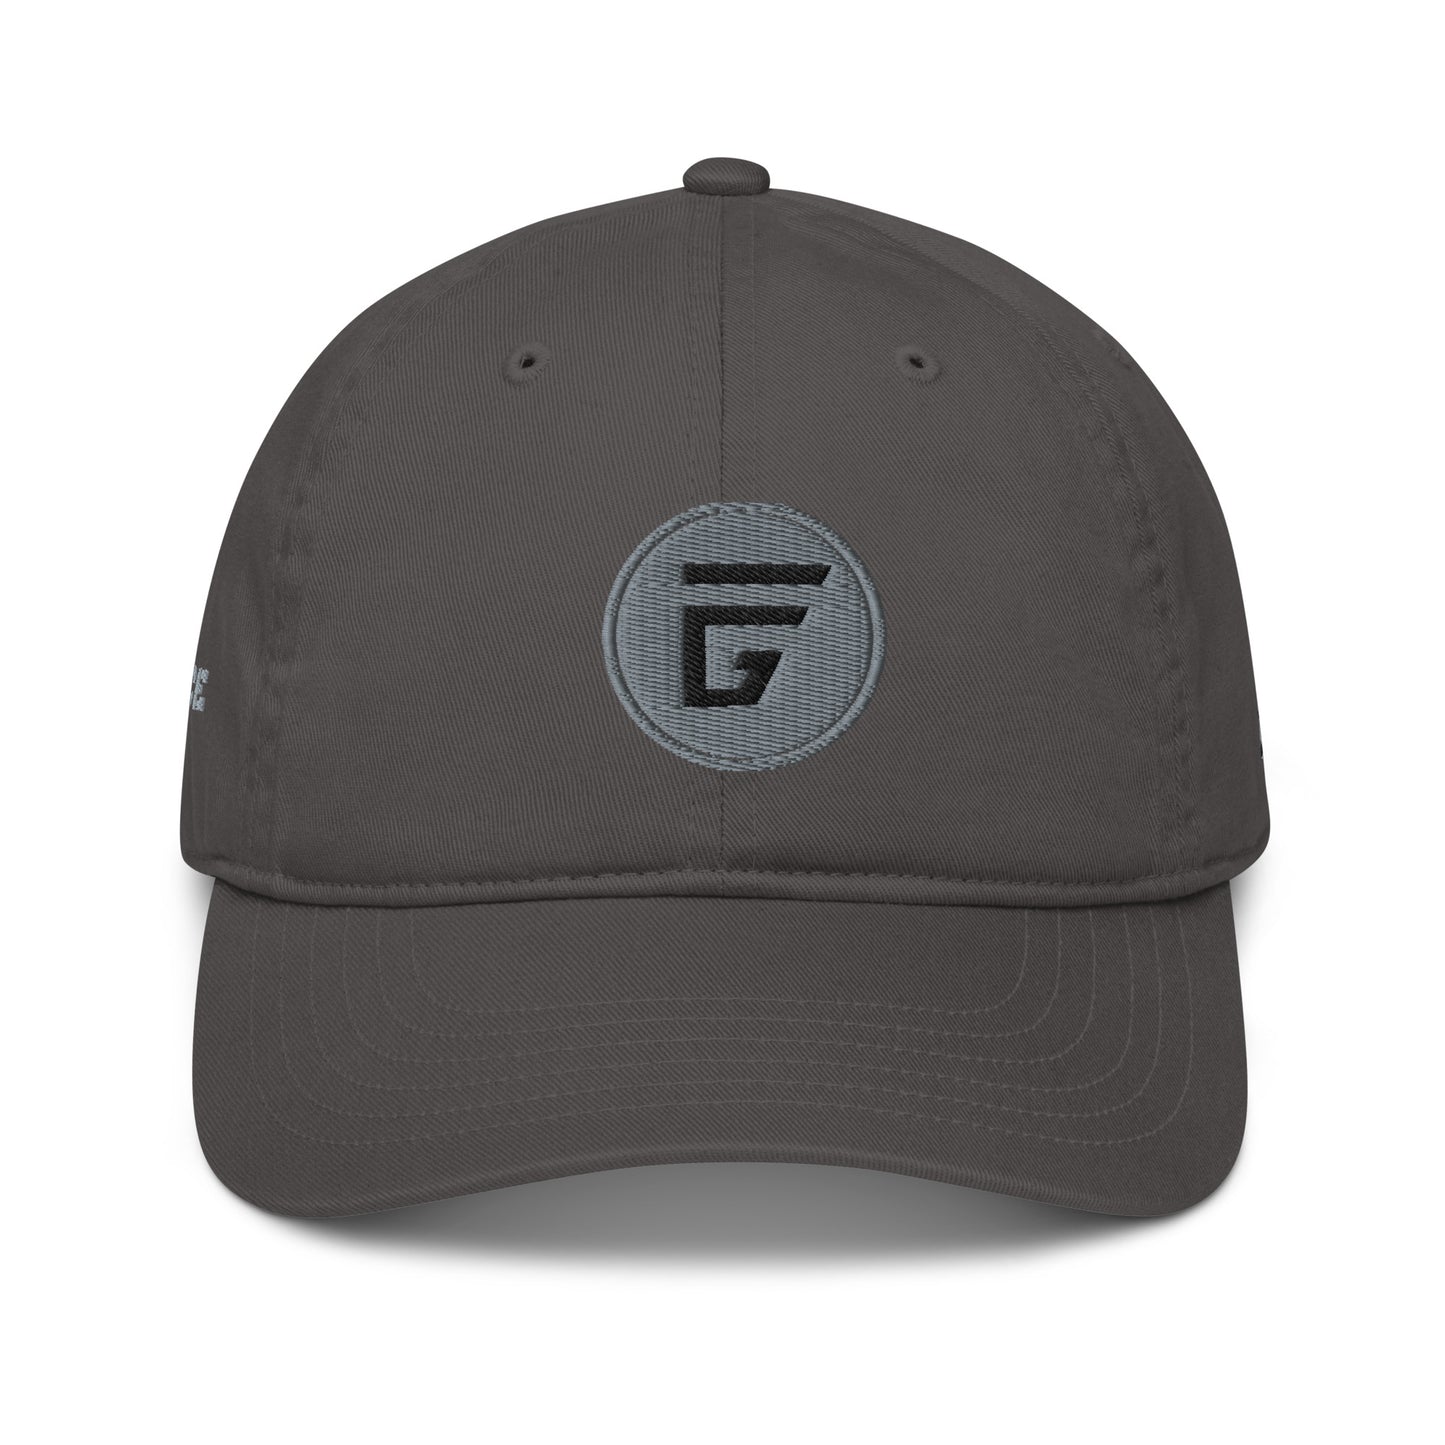 G-FORCE APPAREL GBR Edition CAP